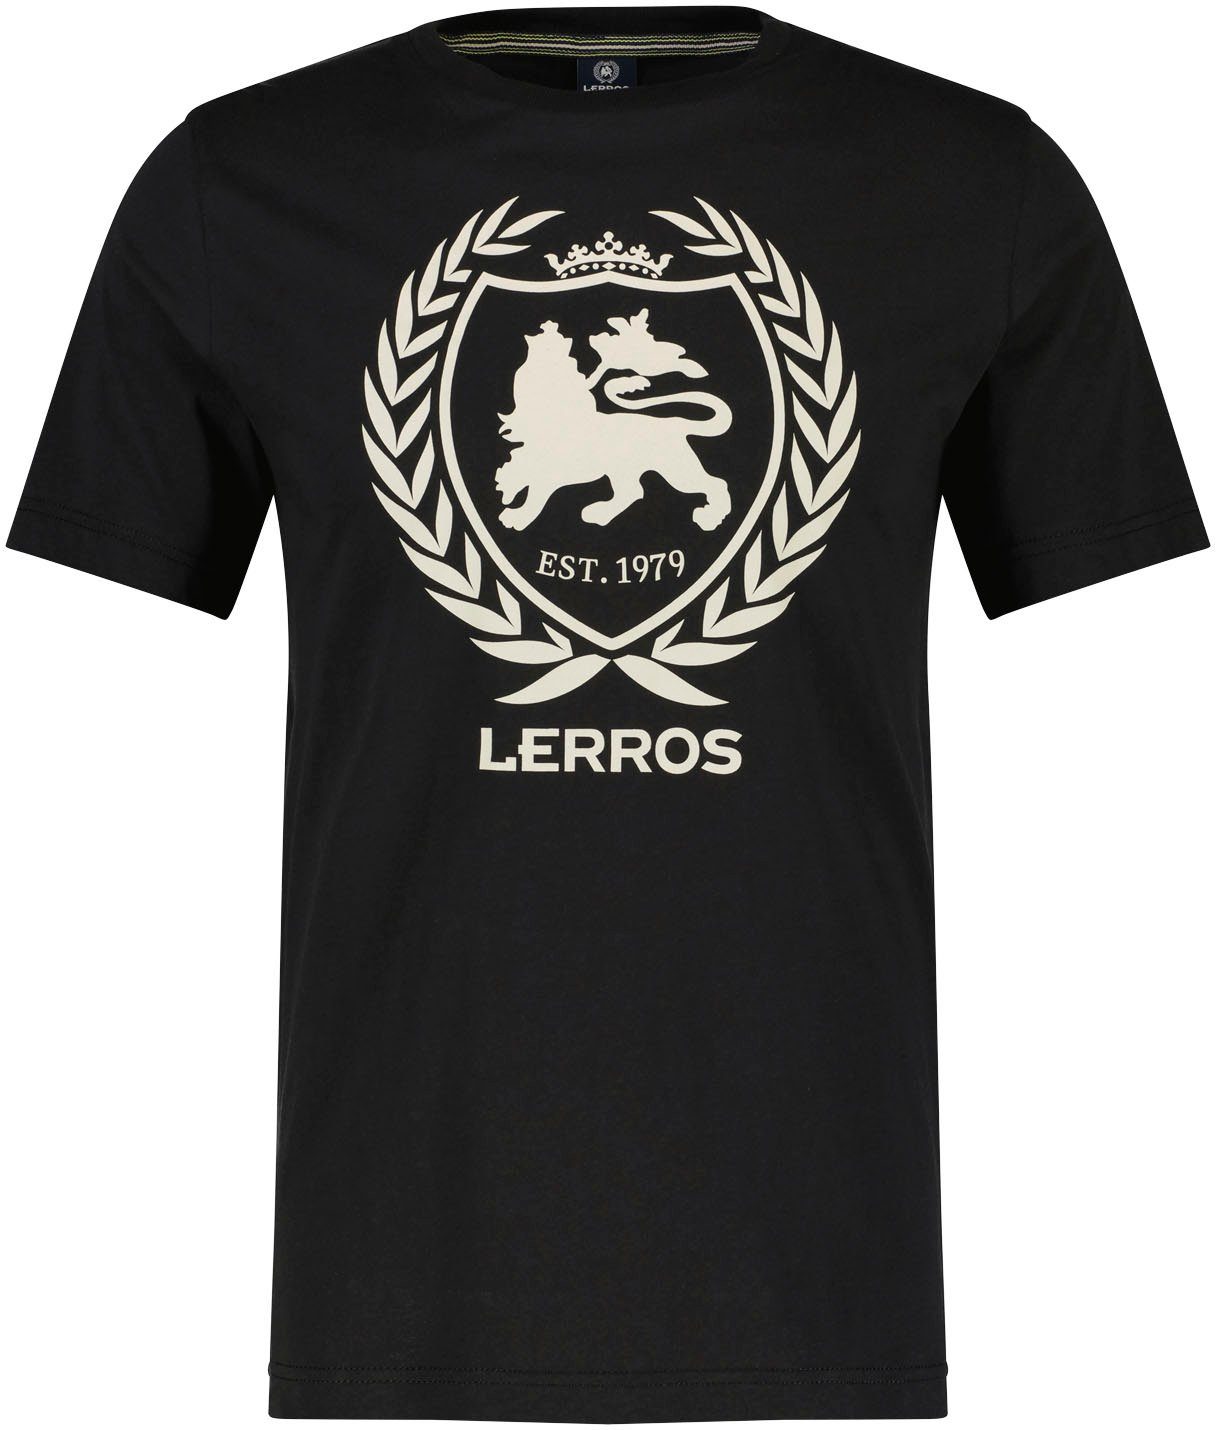 LERROS T-Shirt black